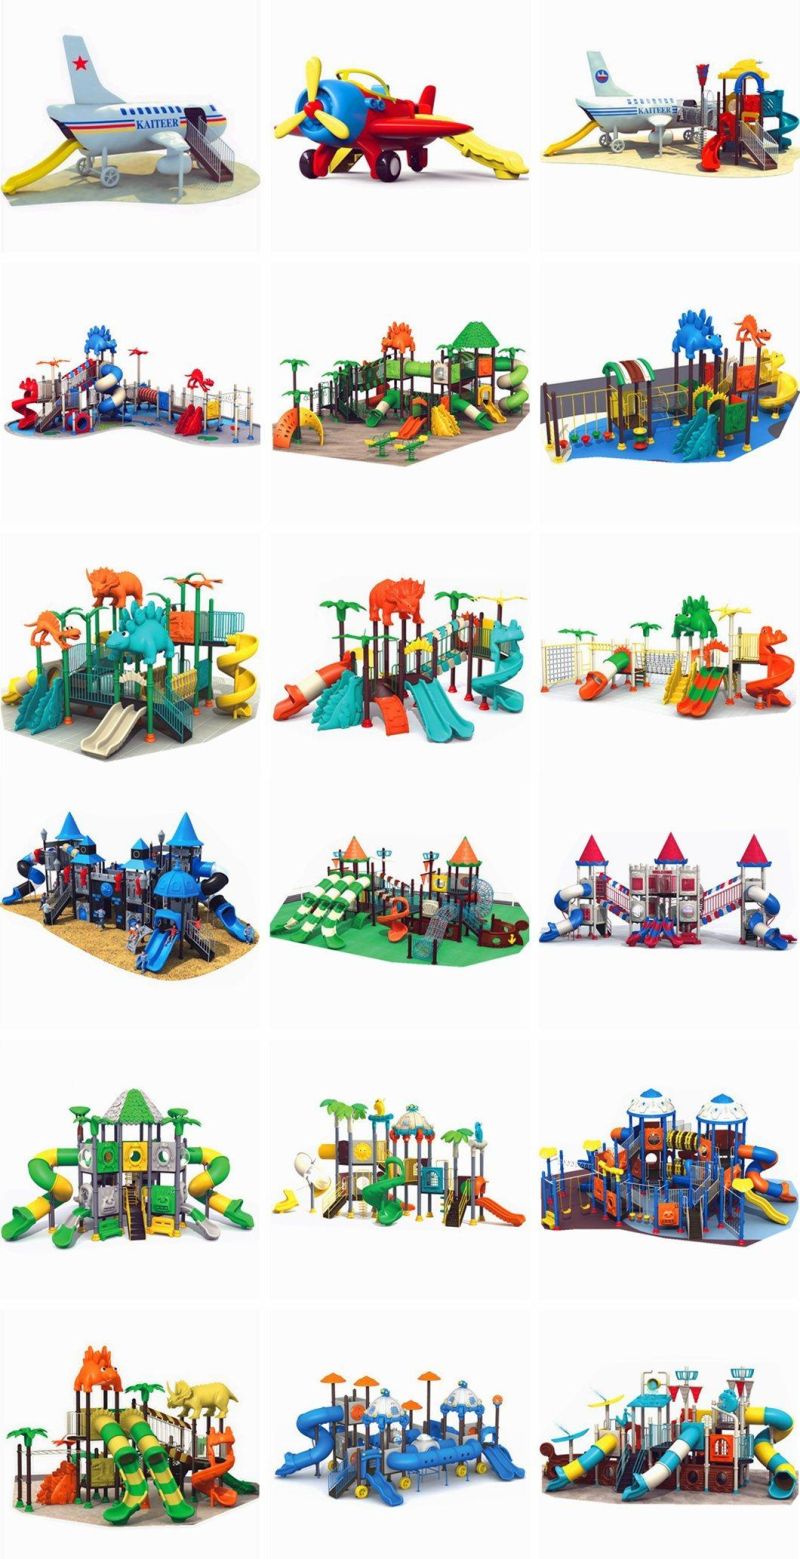 Outdoor Kids Playground Slide Amusement Park Equipment Beehive Maze 307b